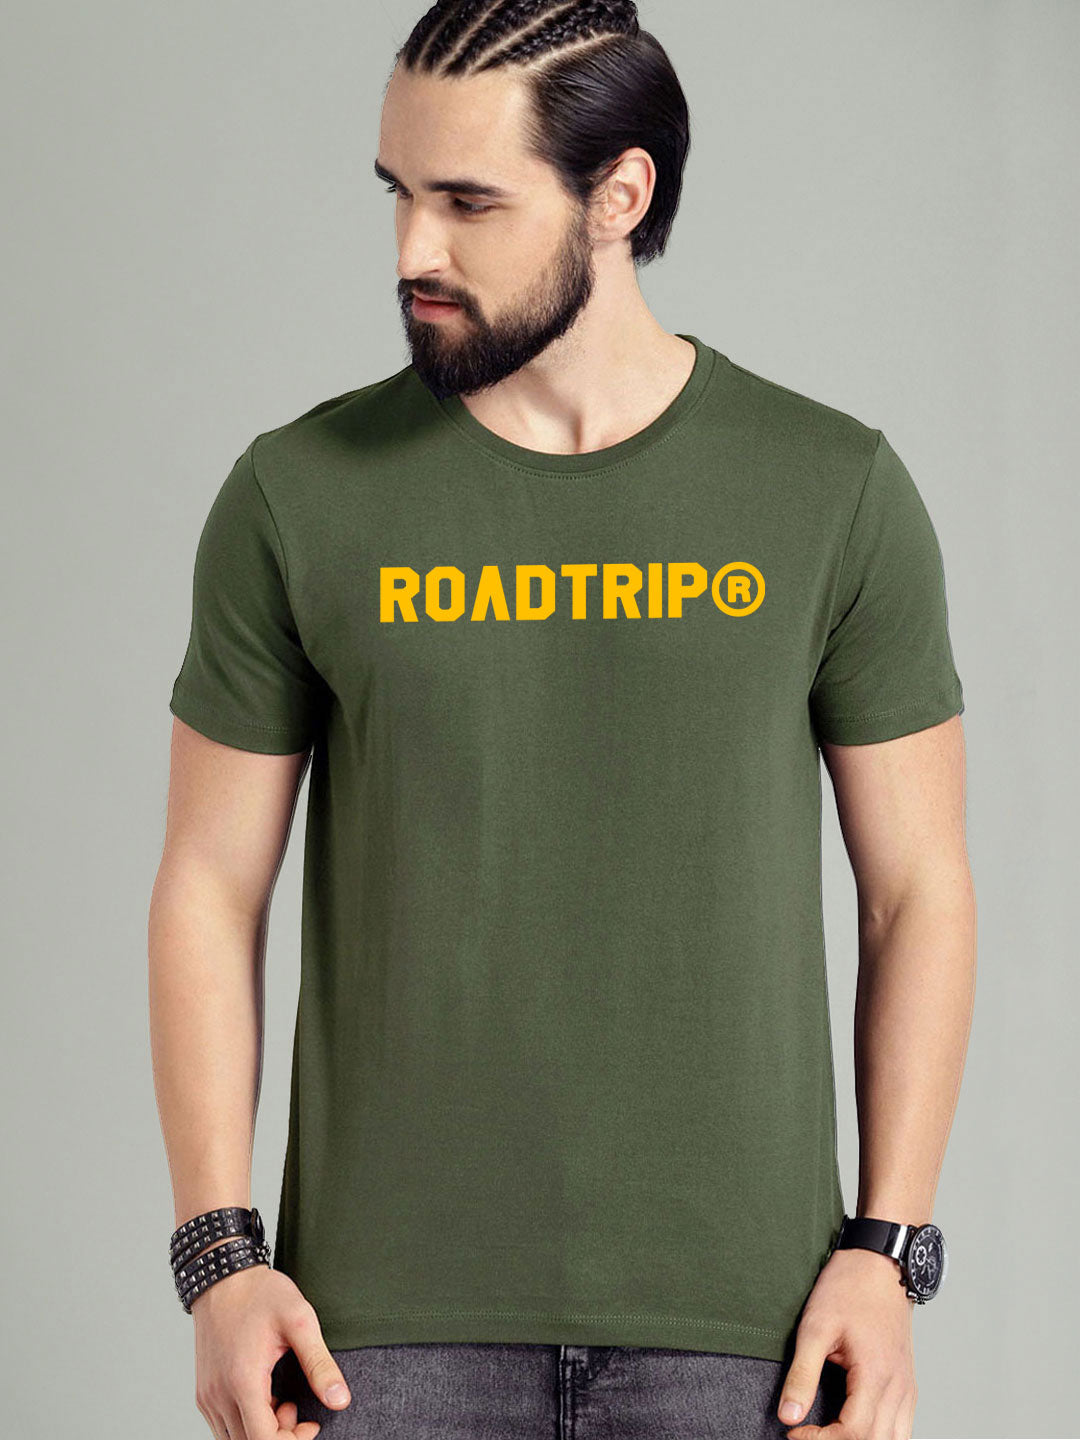 Official RoadTrip® Premium Printed T-shirt - Road Trip